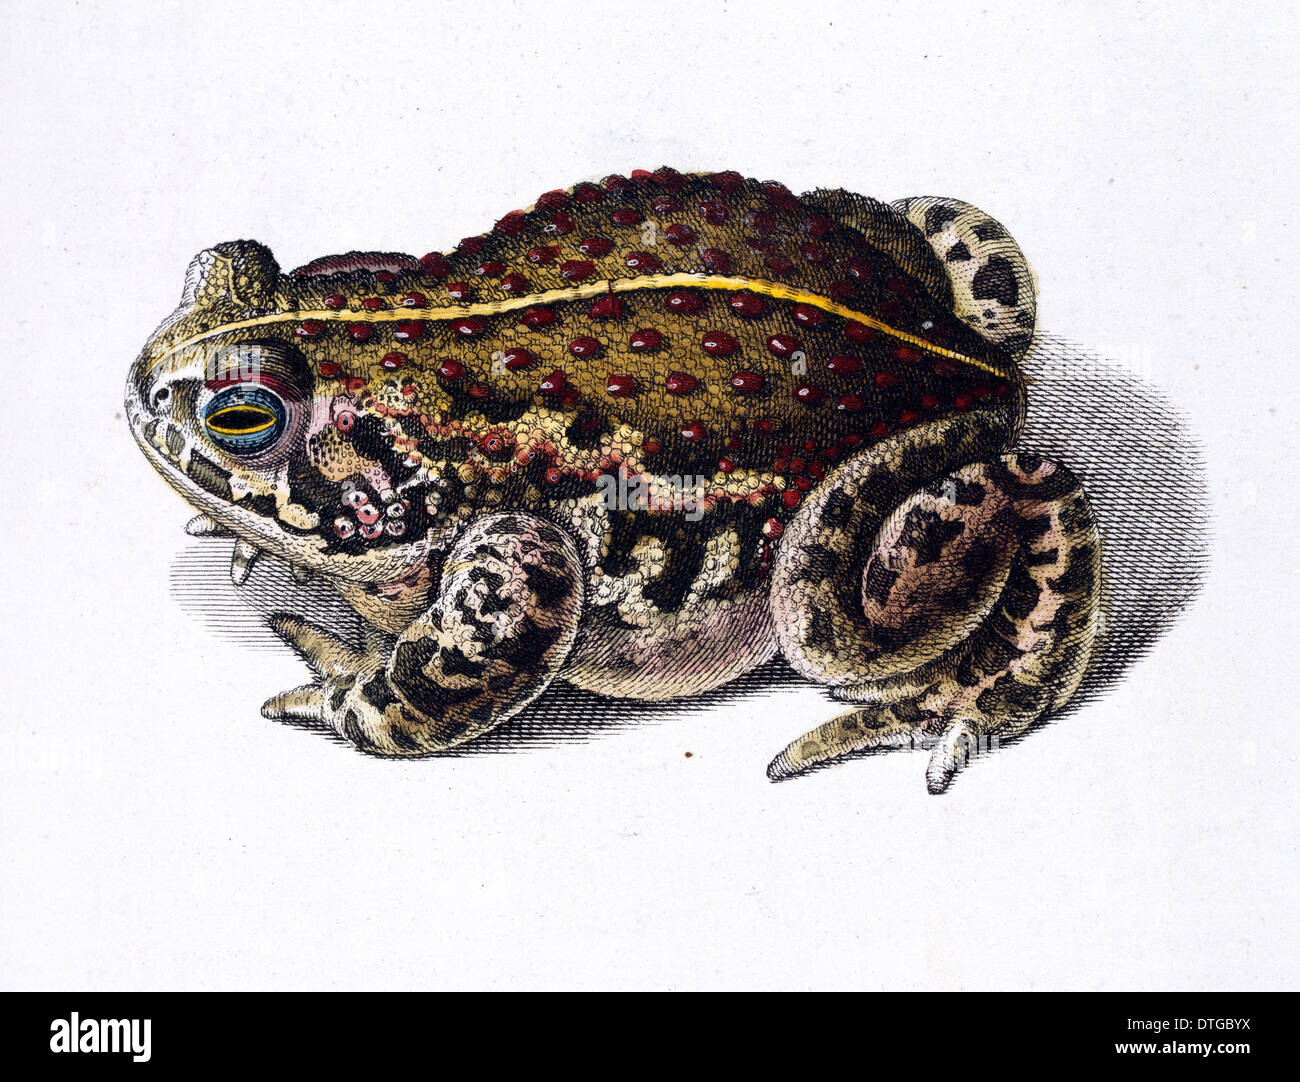 Toad illustration Stock Photo